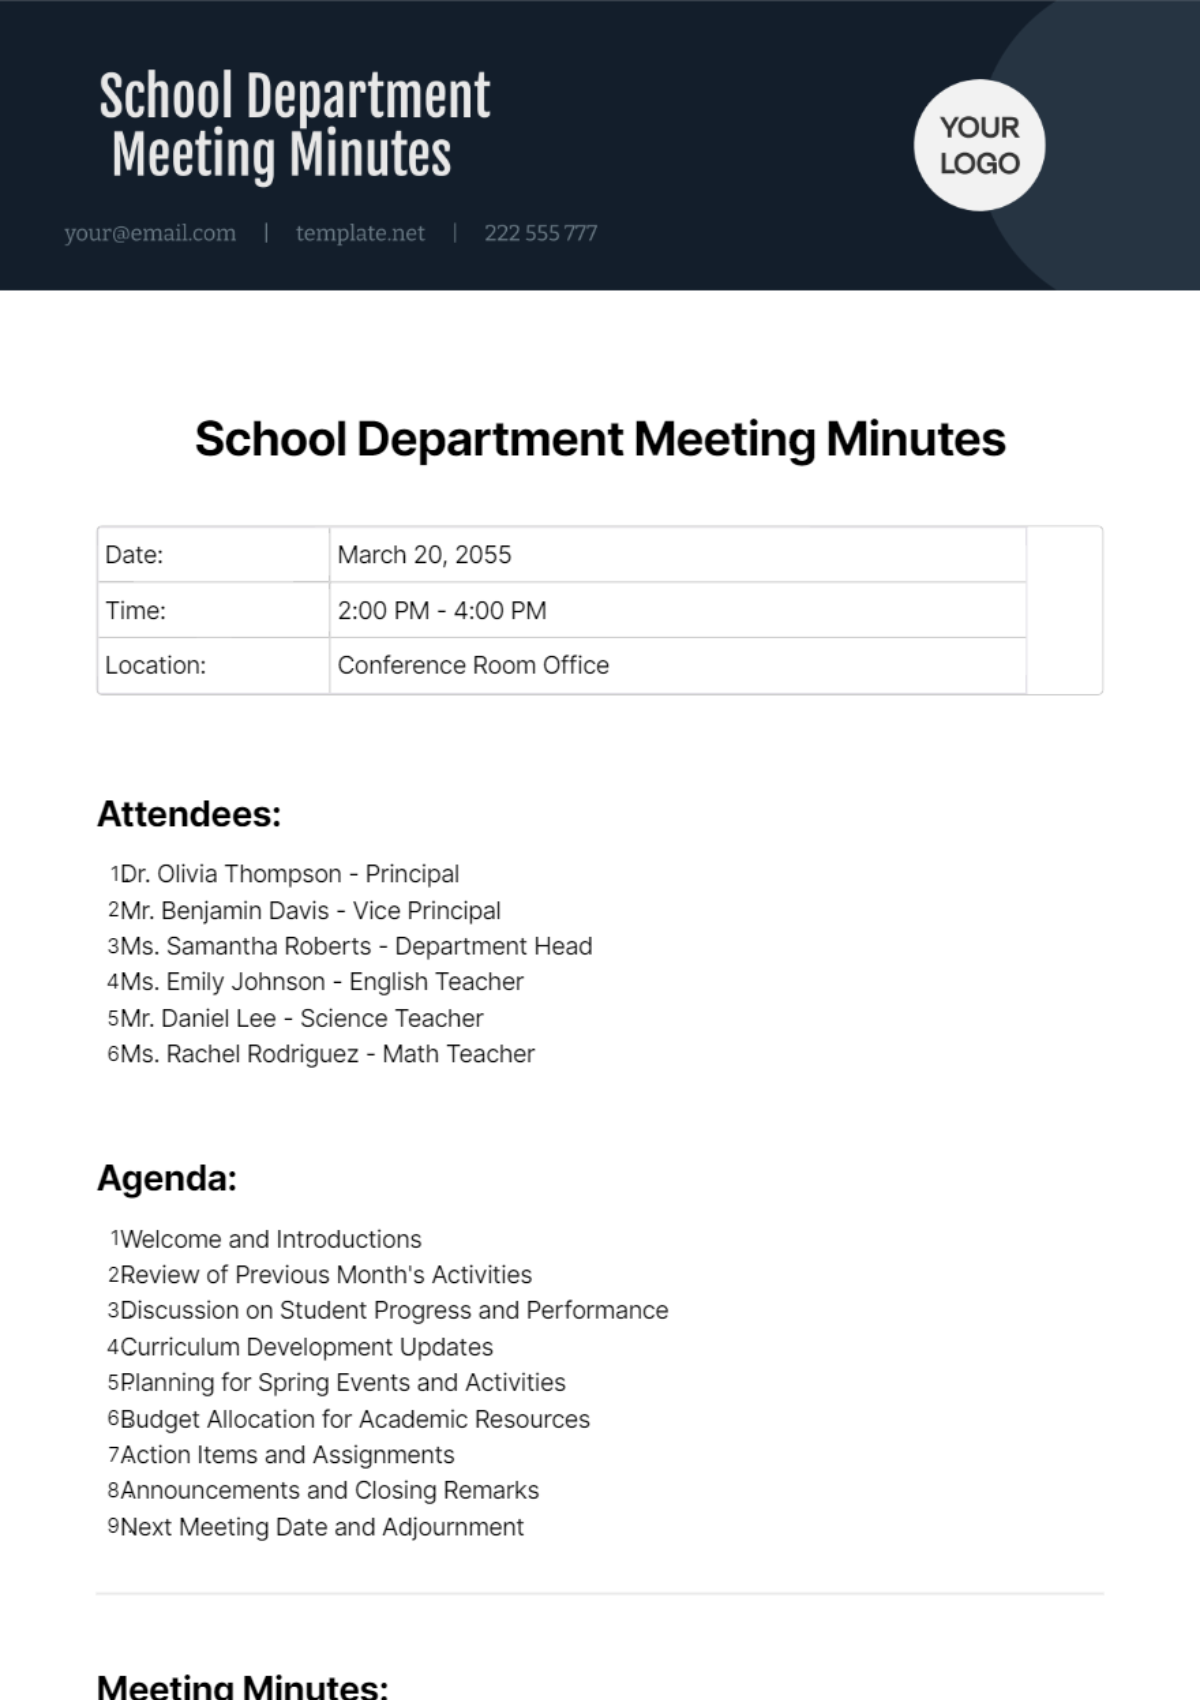 School Department Meeting Minutes Template